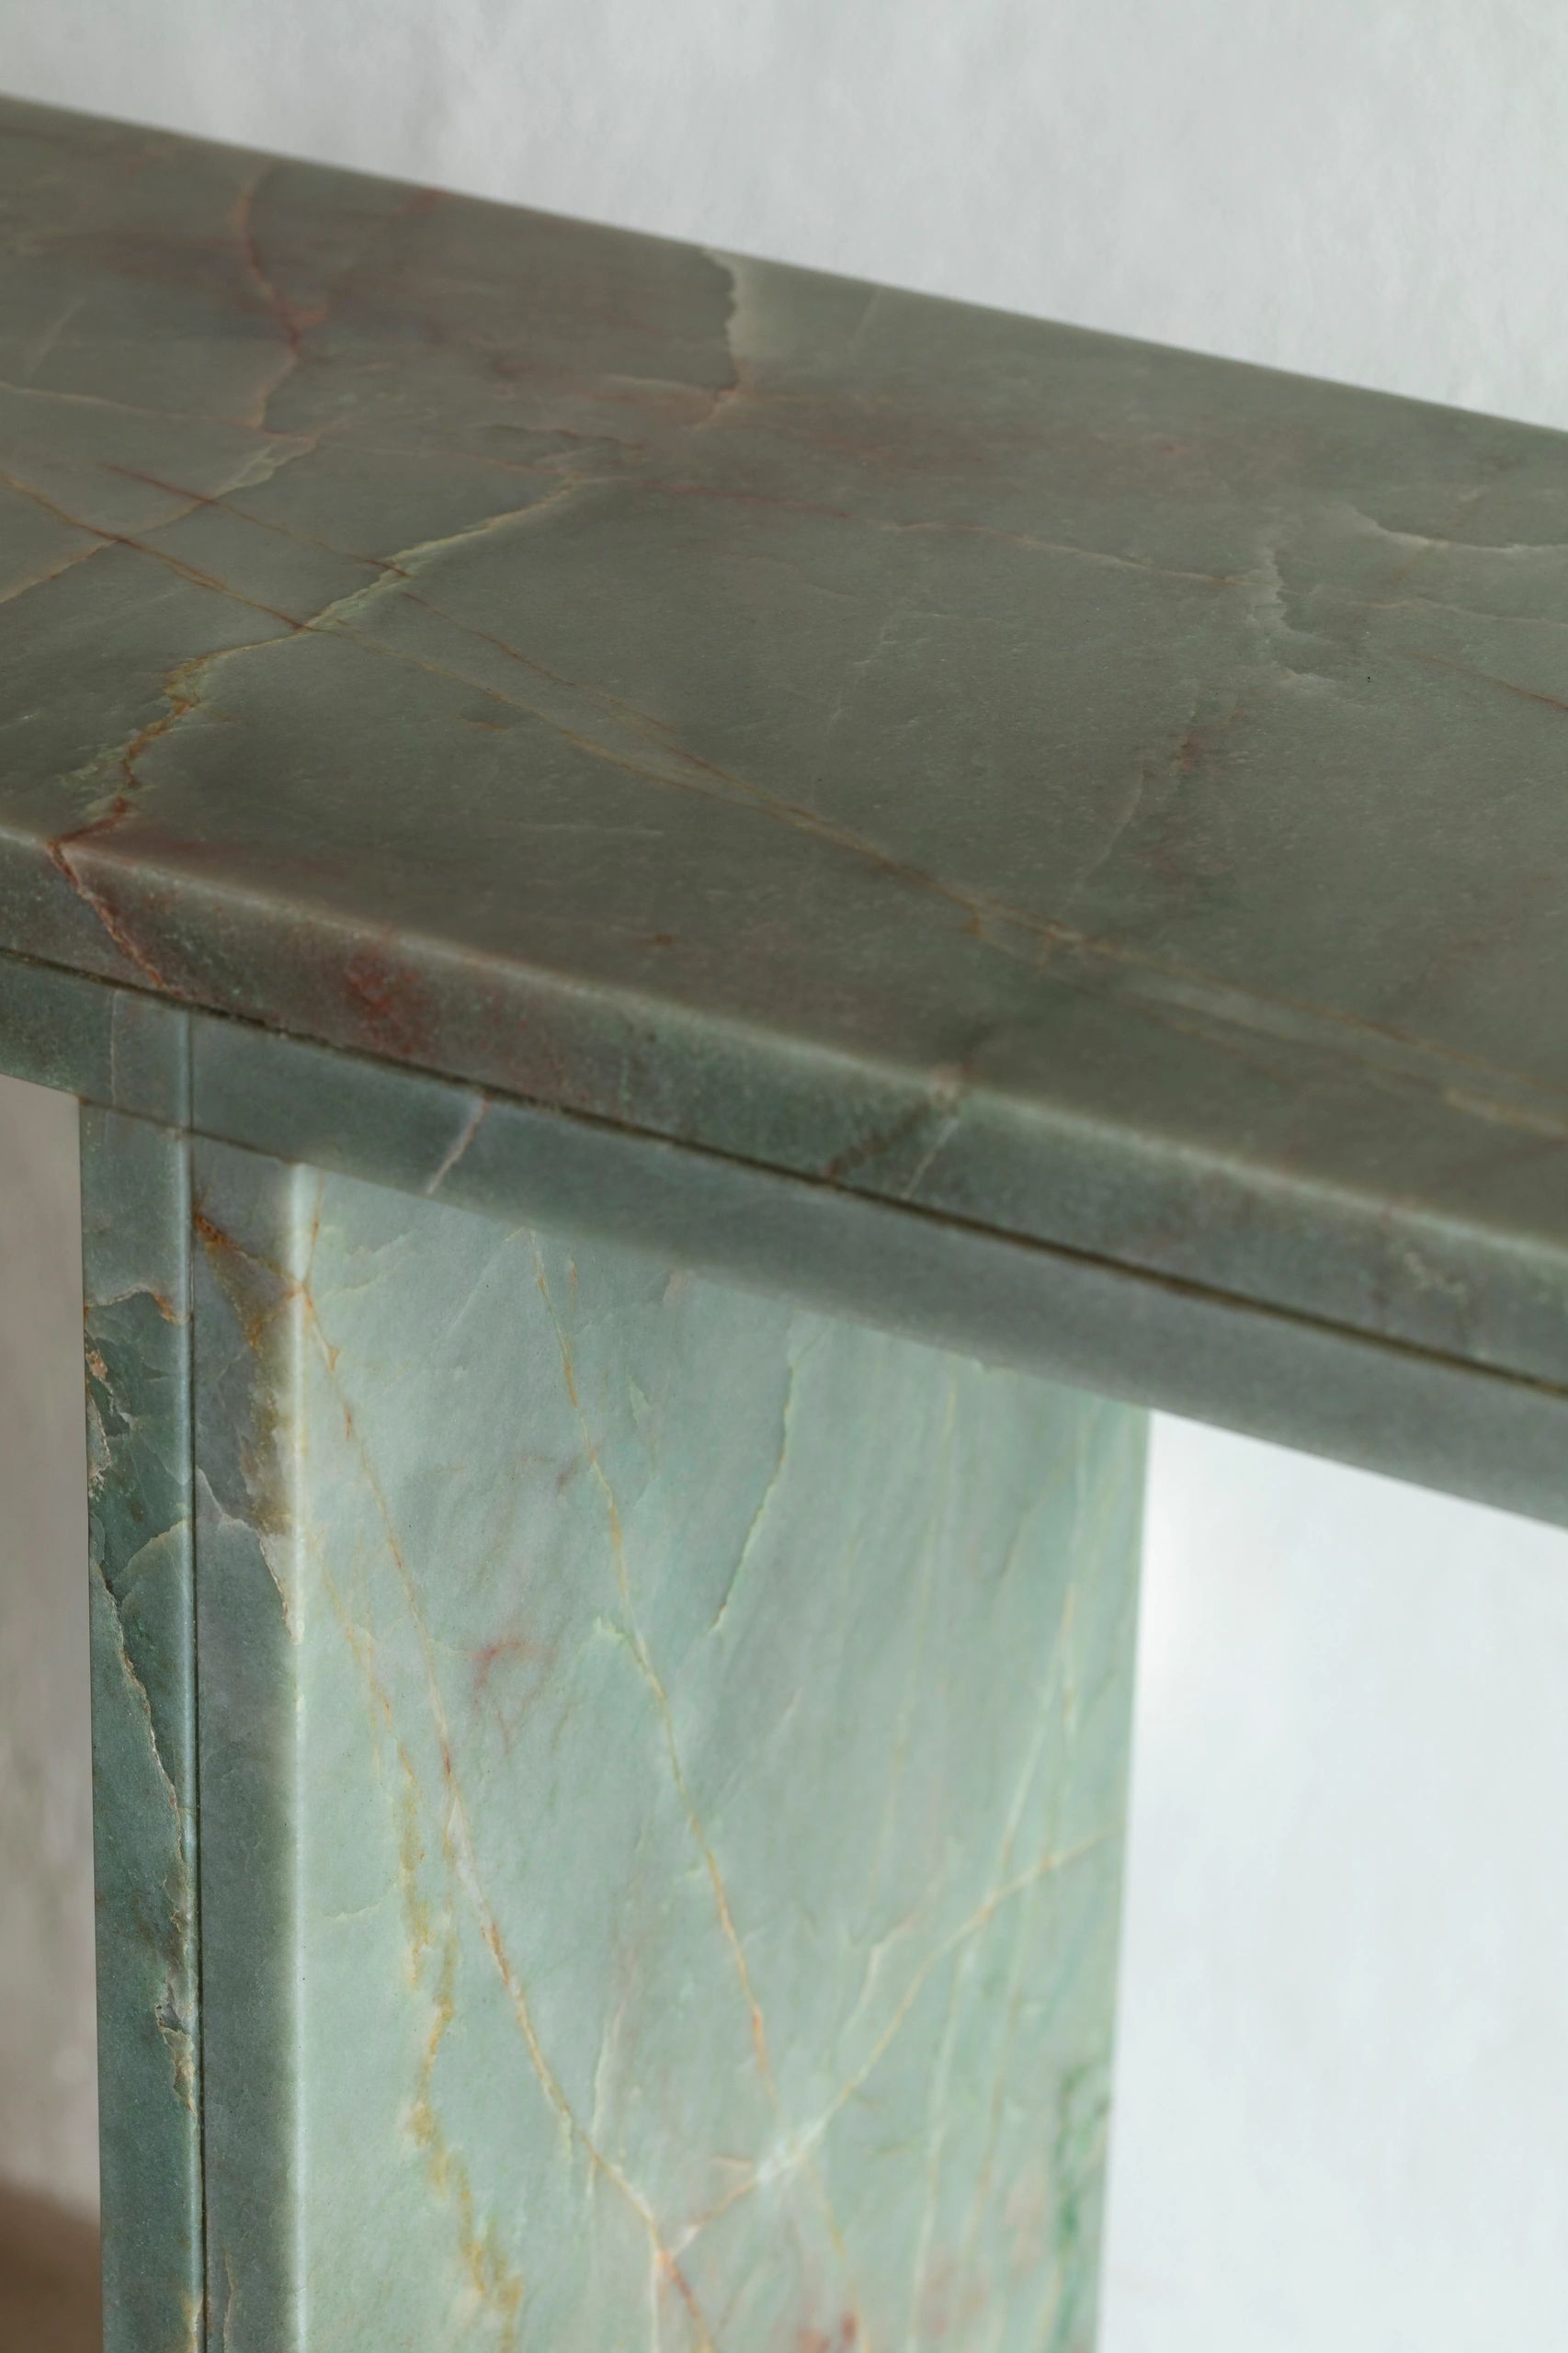 dam atelier marble collectible table
interior design
architecture